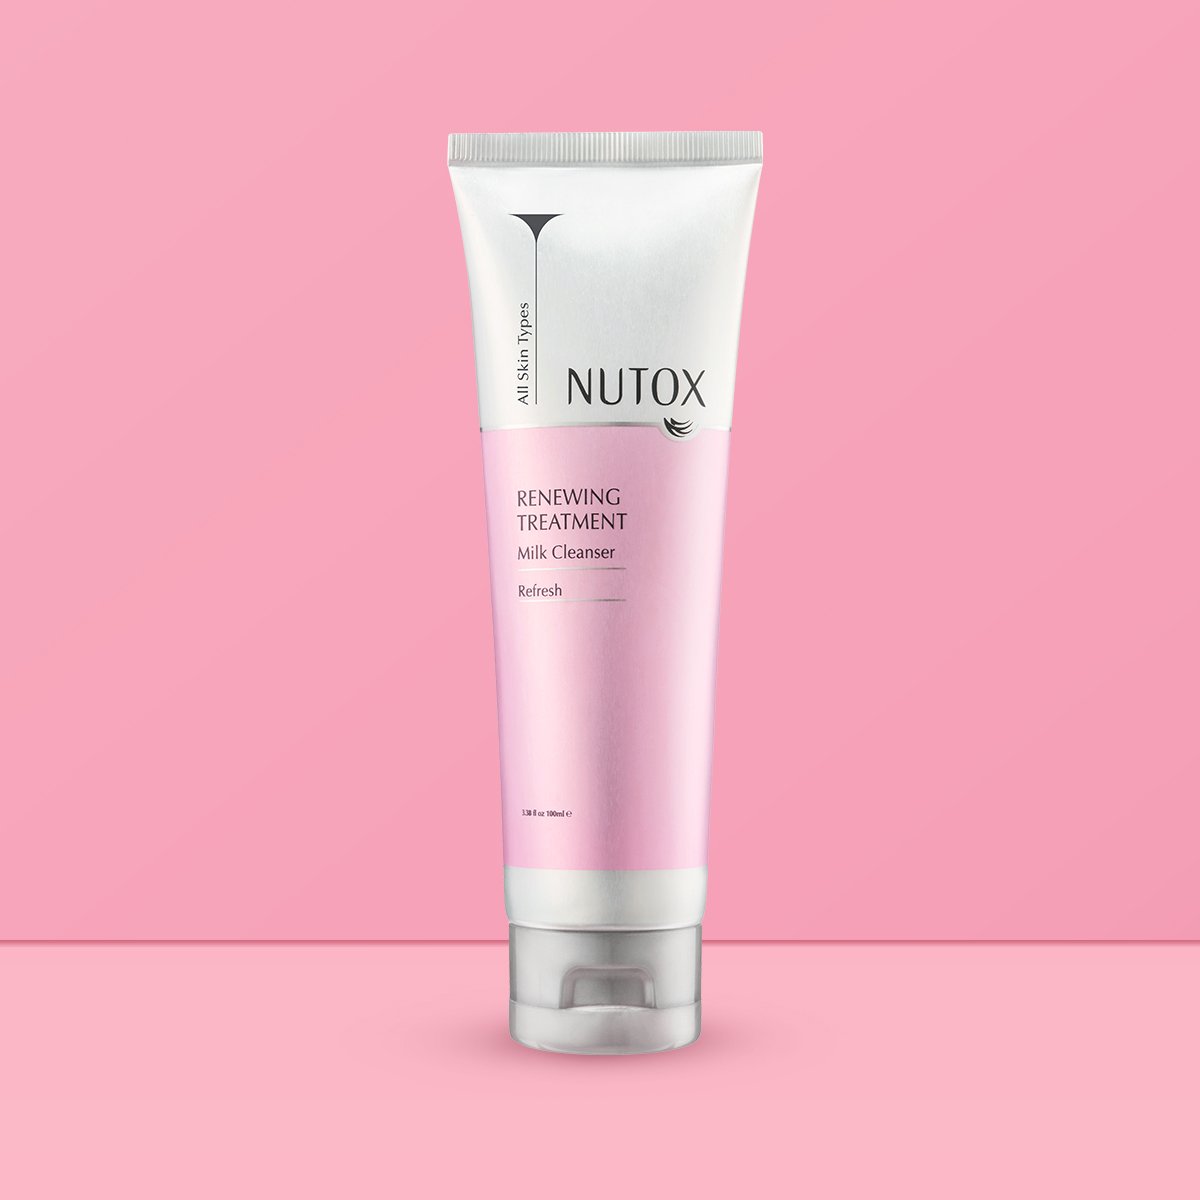 Nutox Renewing Treatment Milk Cleanser